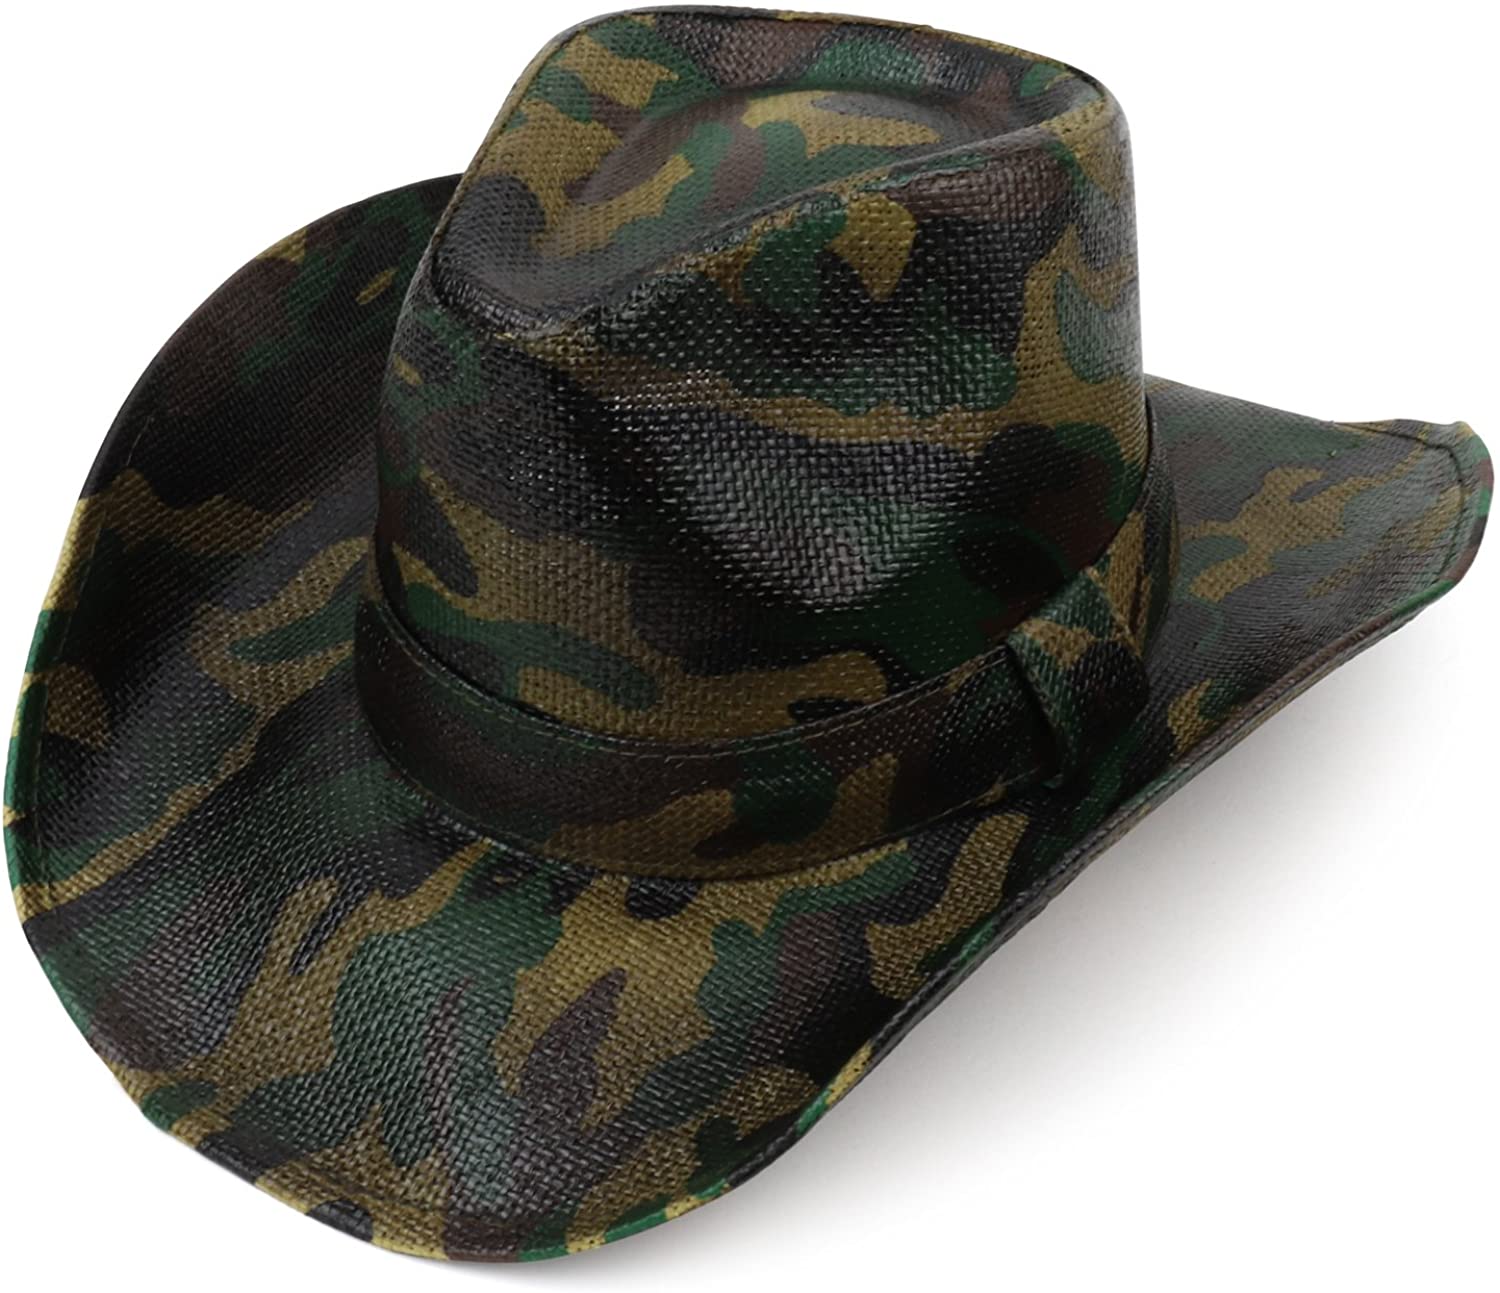 Armycrew Woodland Camouflage Print Western Paper Straw Cowboy Hat